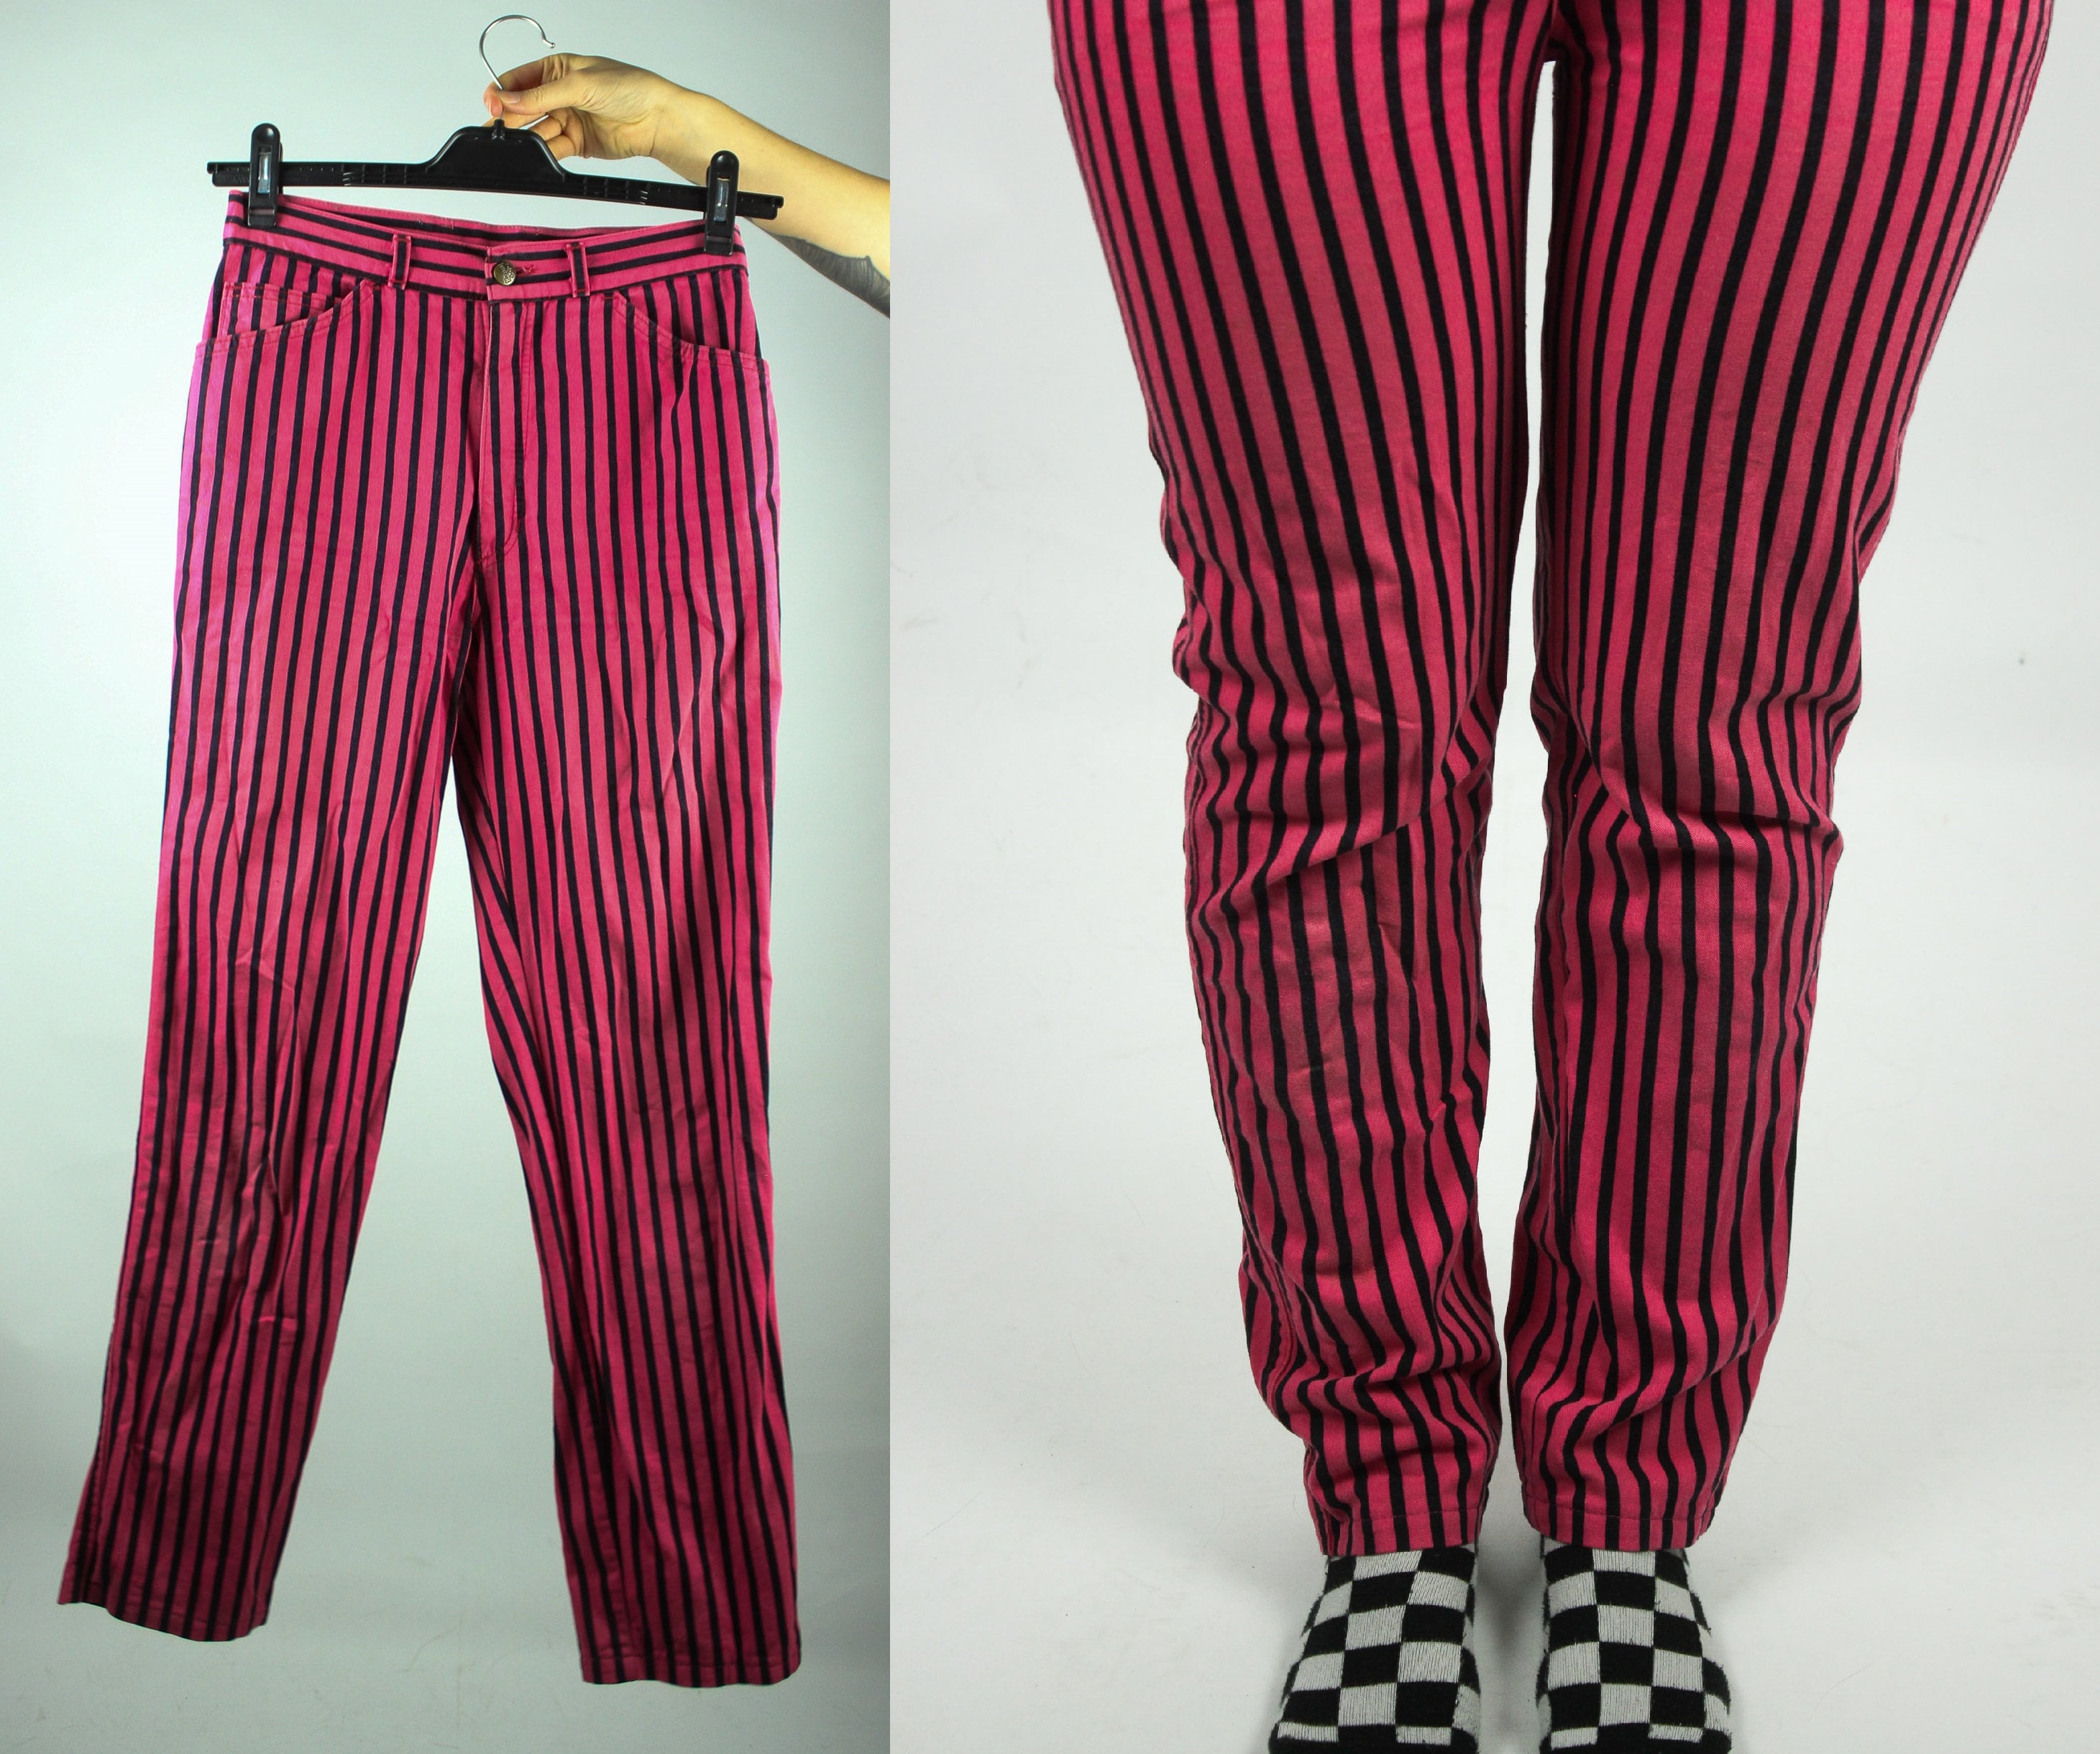 Black and White Vertical Striped Pants Mens, Vintage Vertical